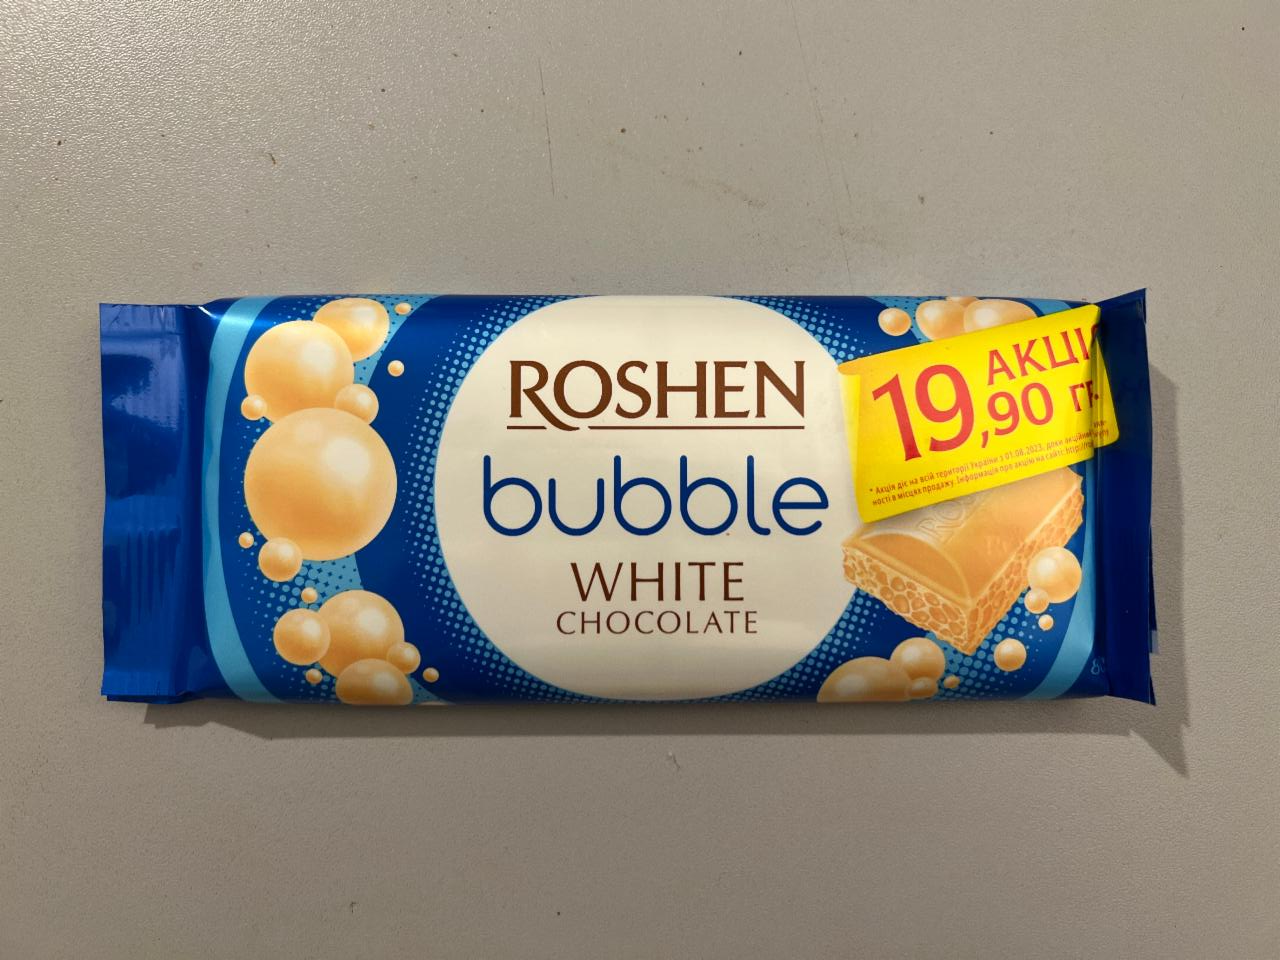 Fotografie - White bubble chocolate Roshen